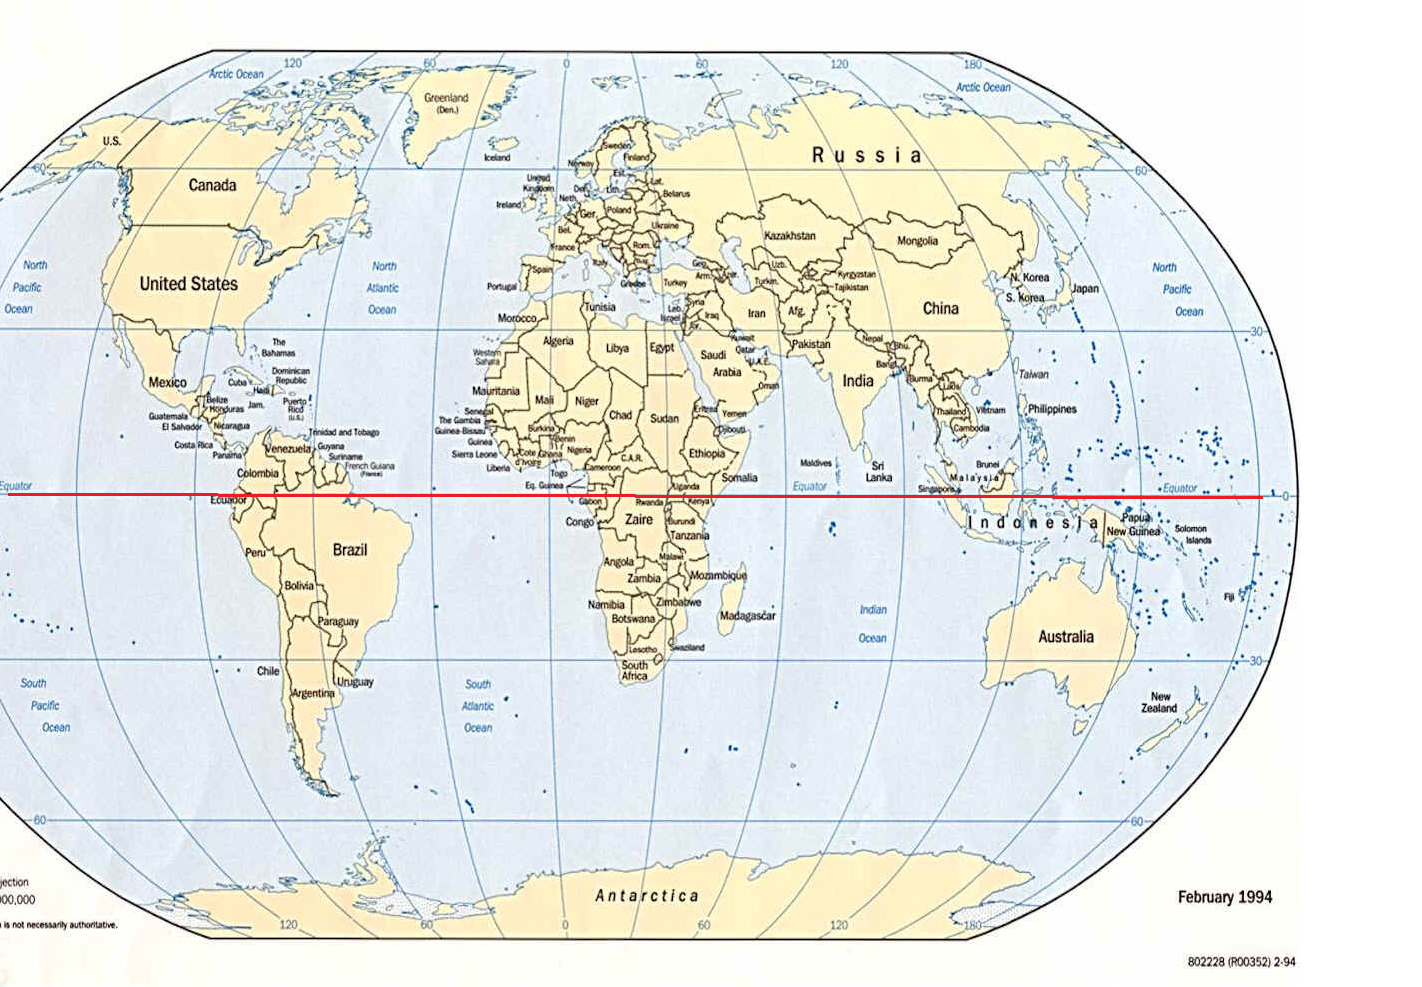 Sixth Grade Cebip Carpe Diem World Map